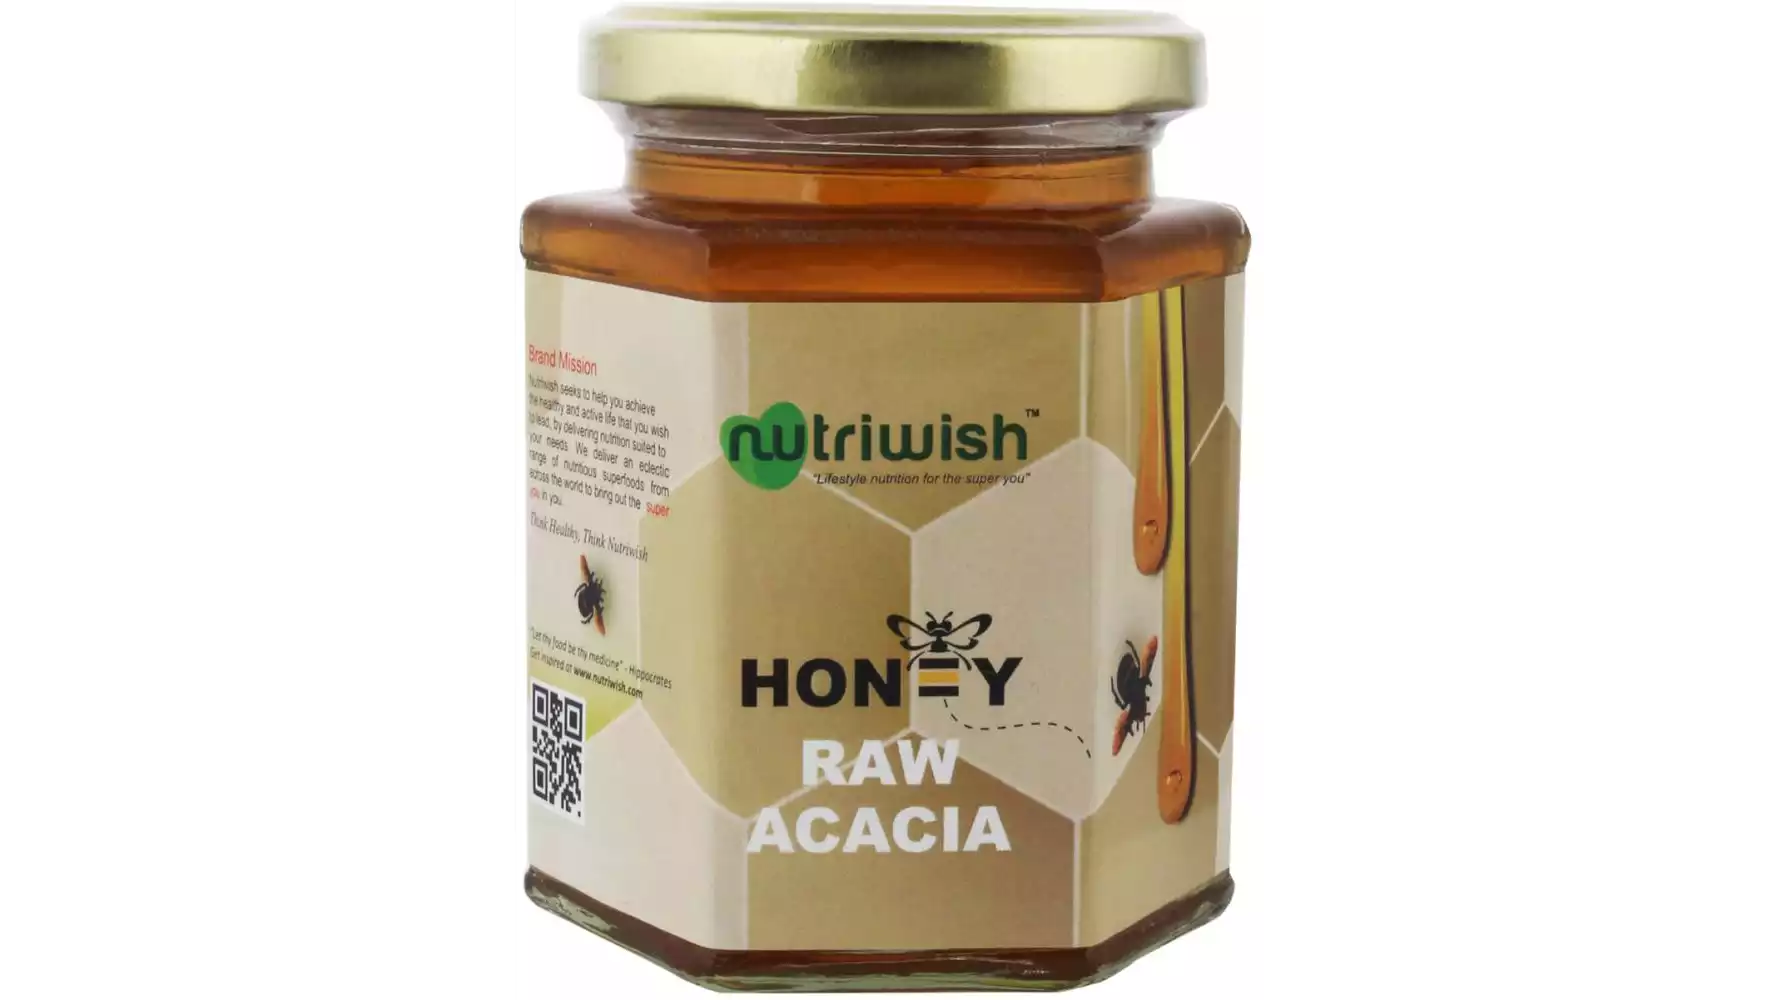 Nutriwish Acacia Honey (350g)